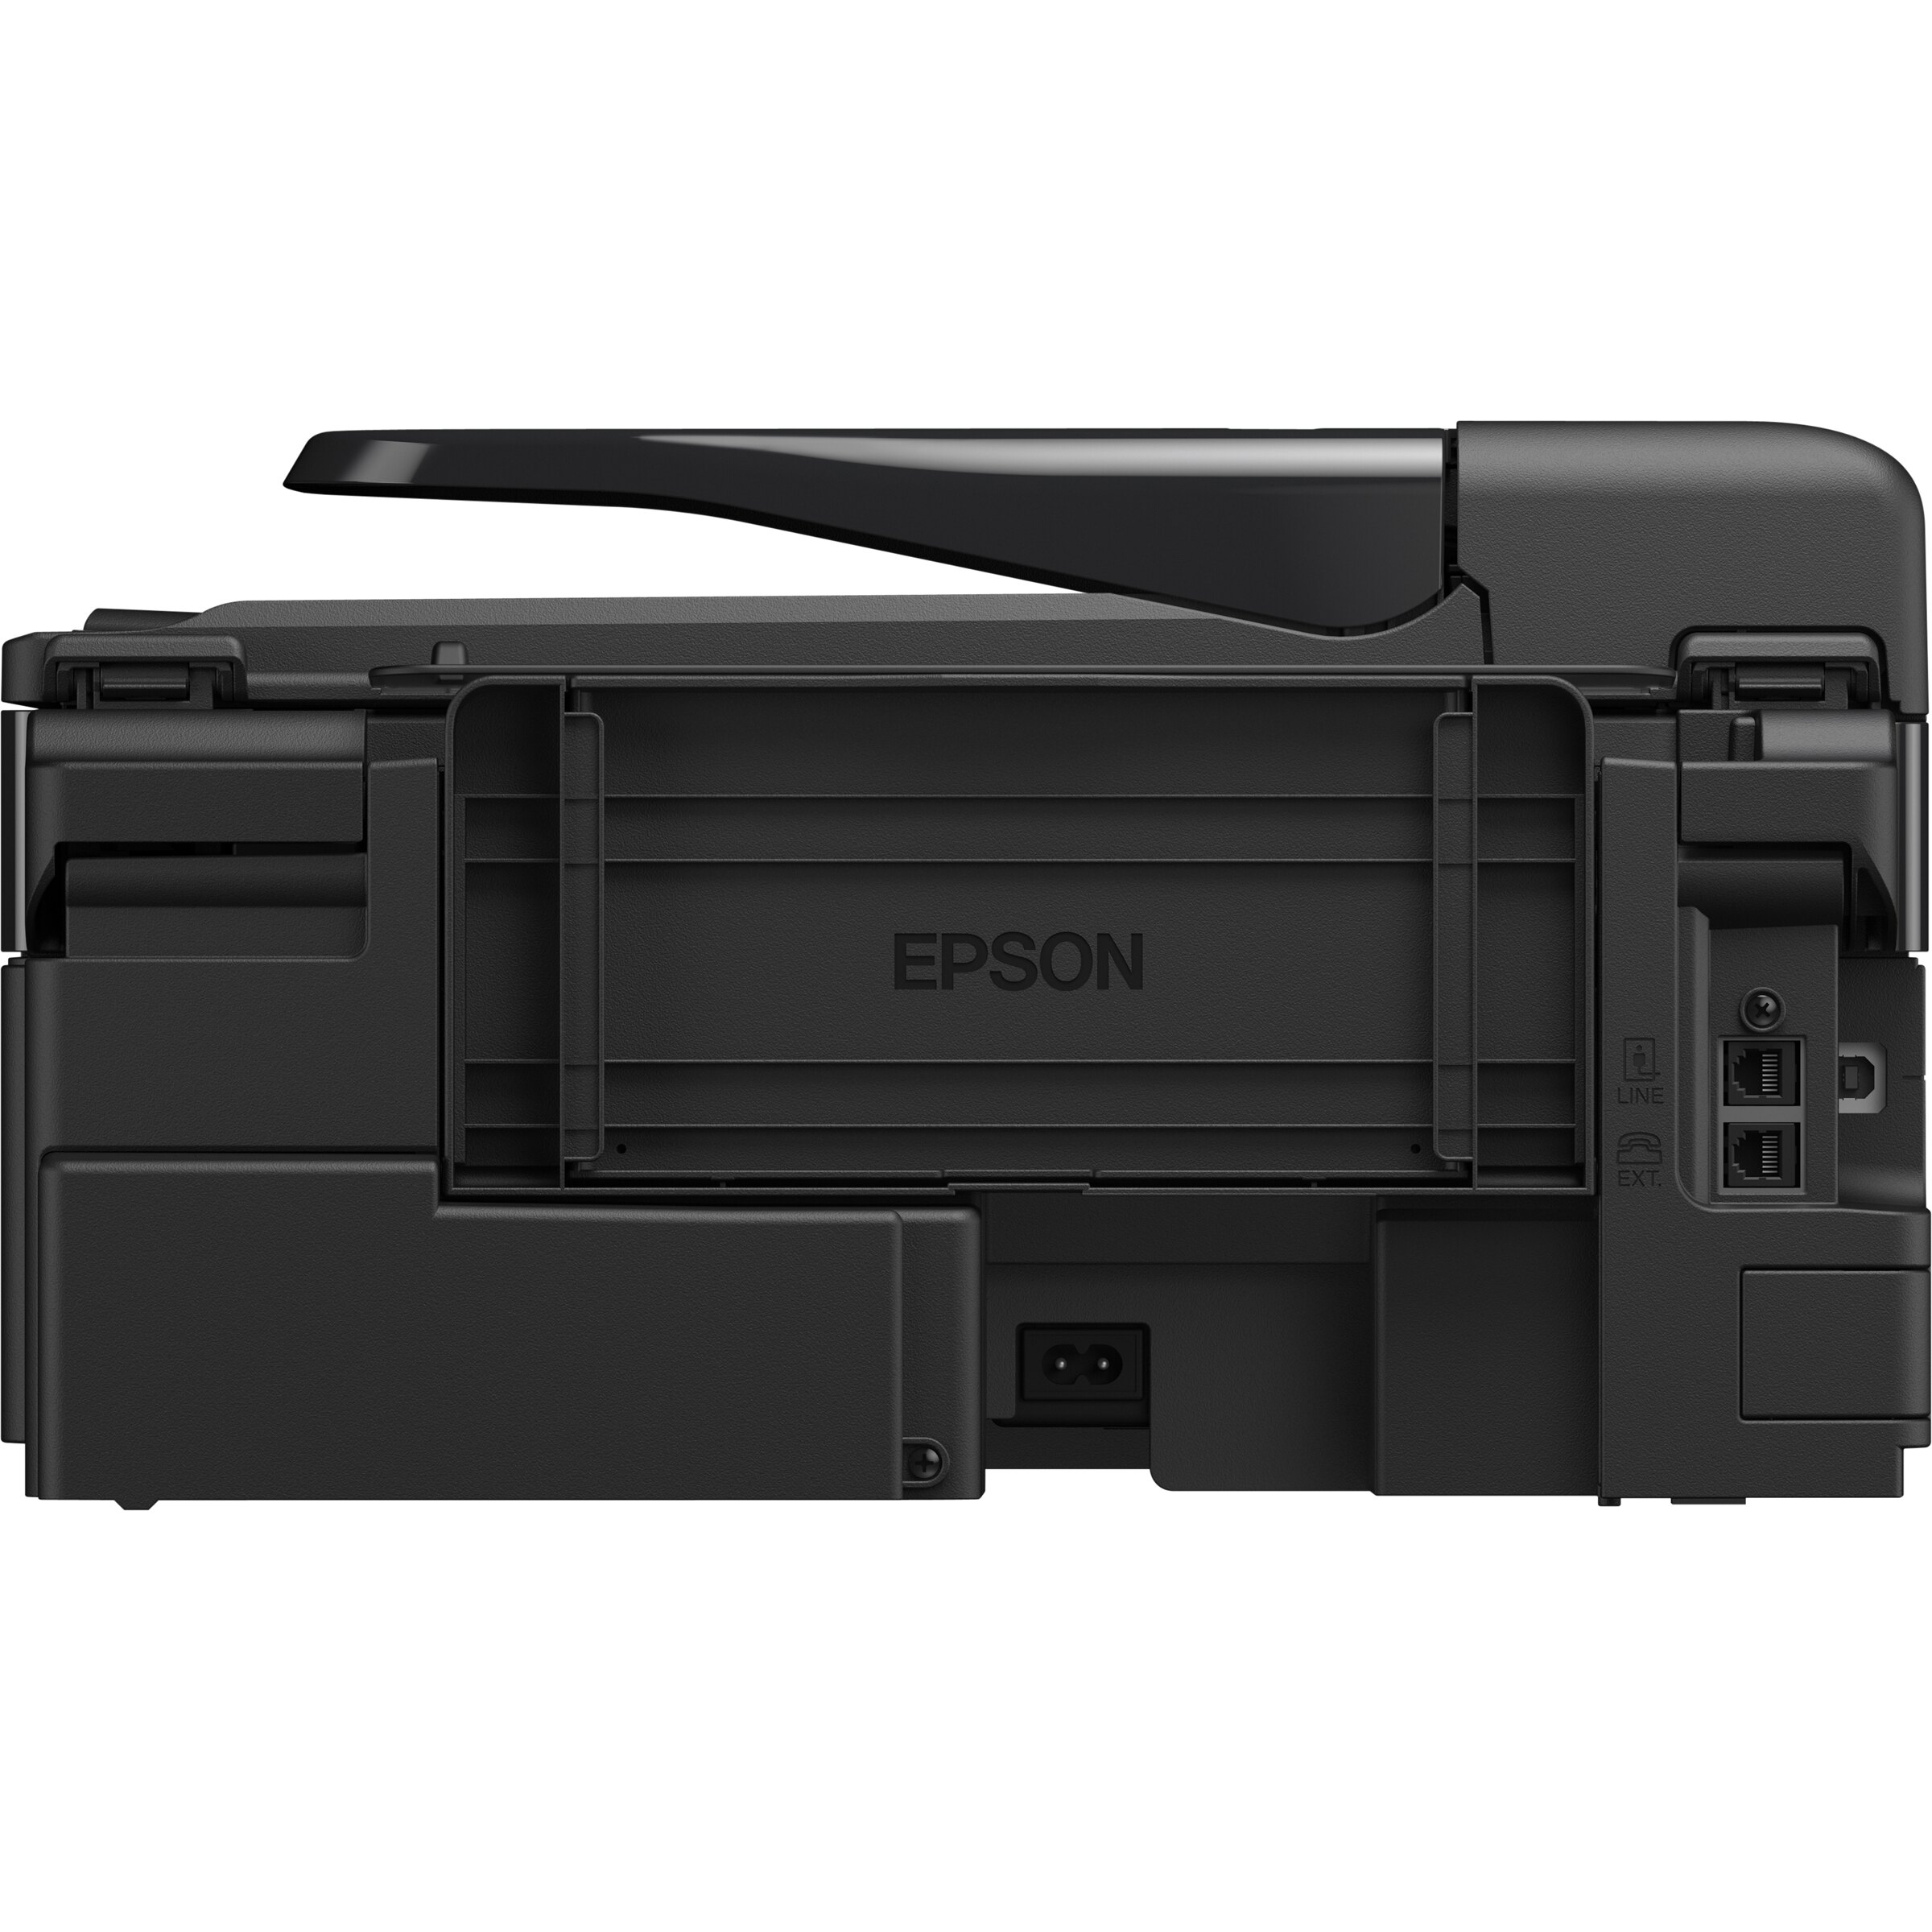 epson wf 2530 scanner troubleshooting